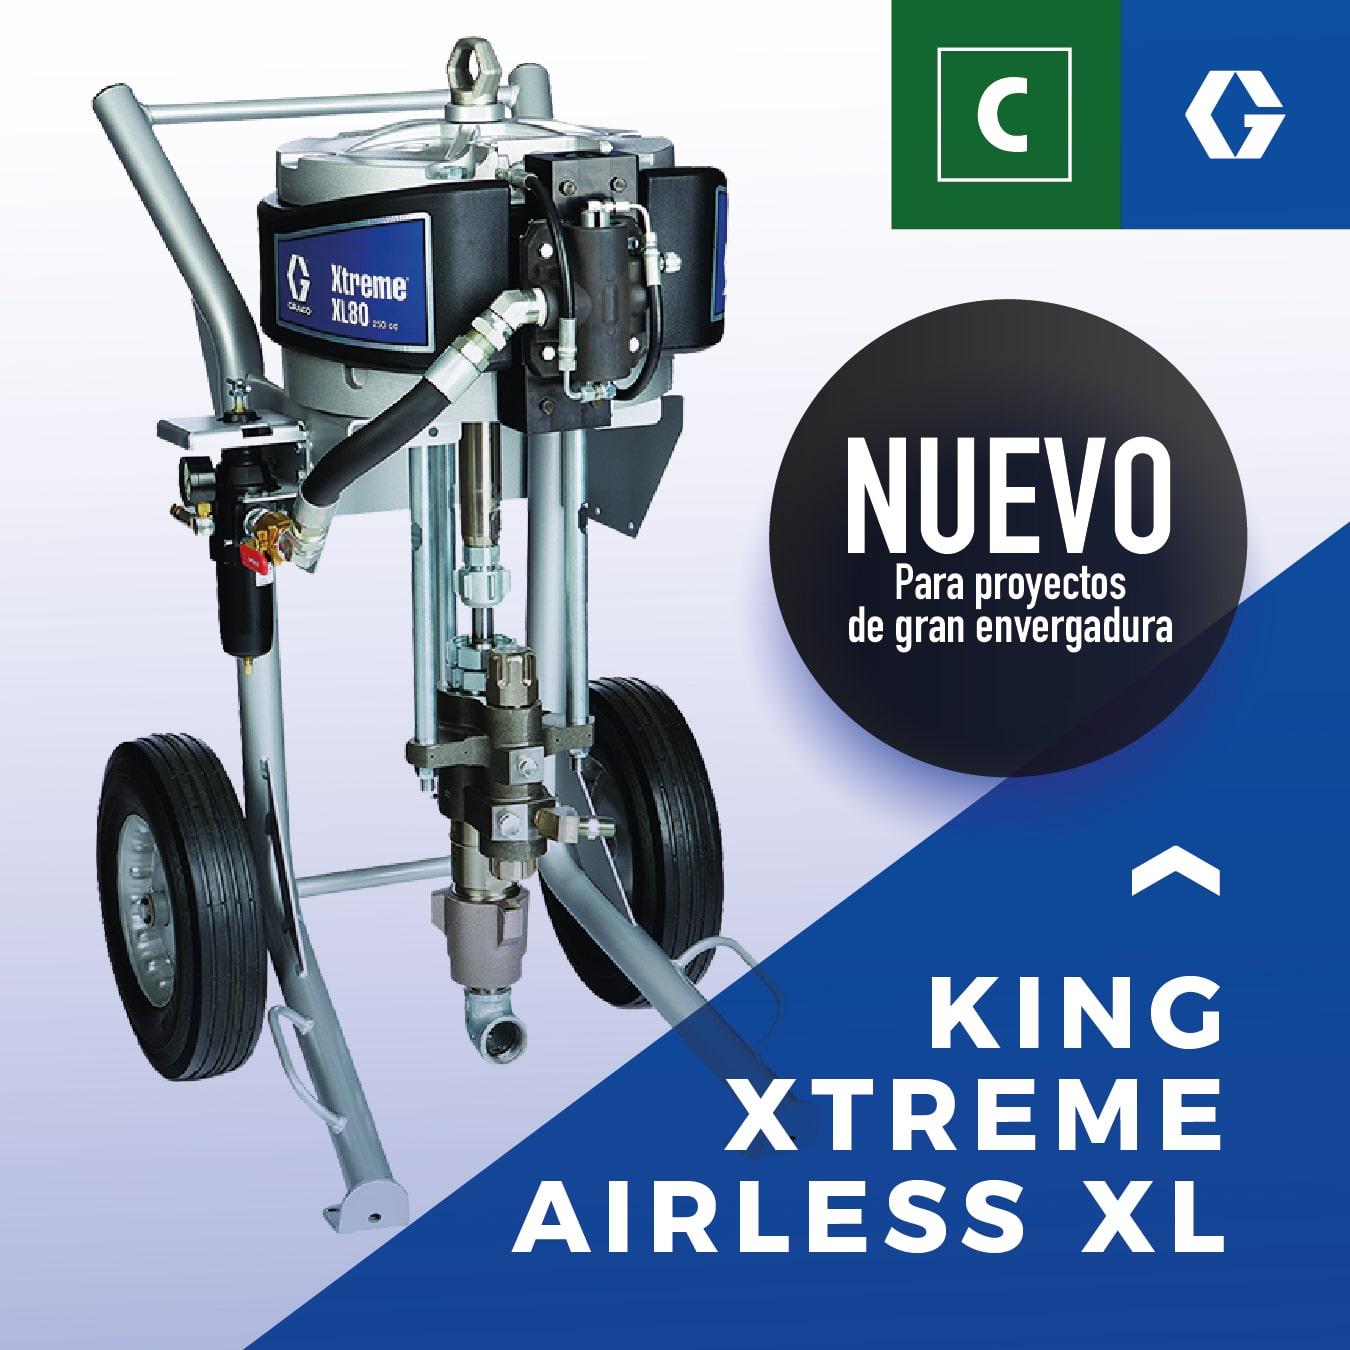 King Xtreme Airless XL